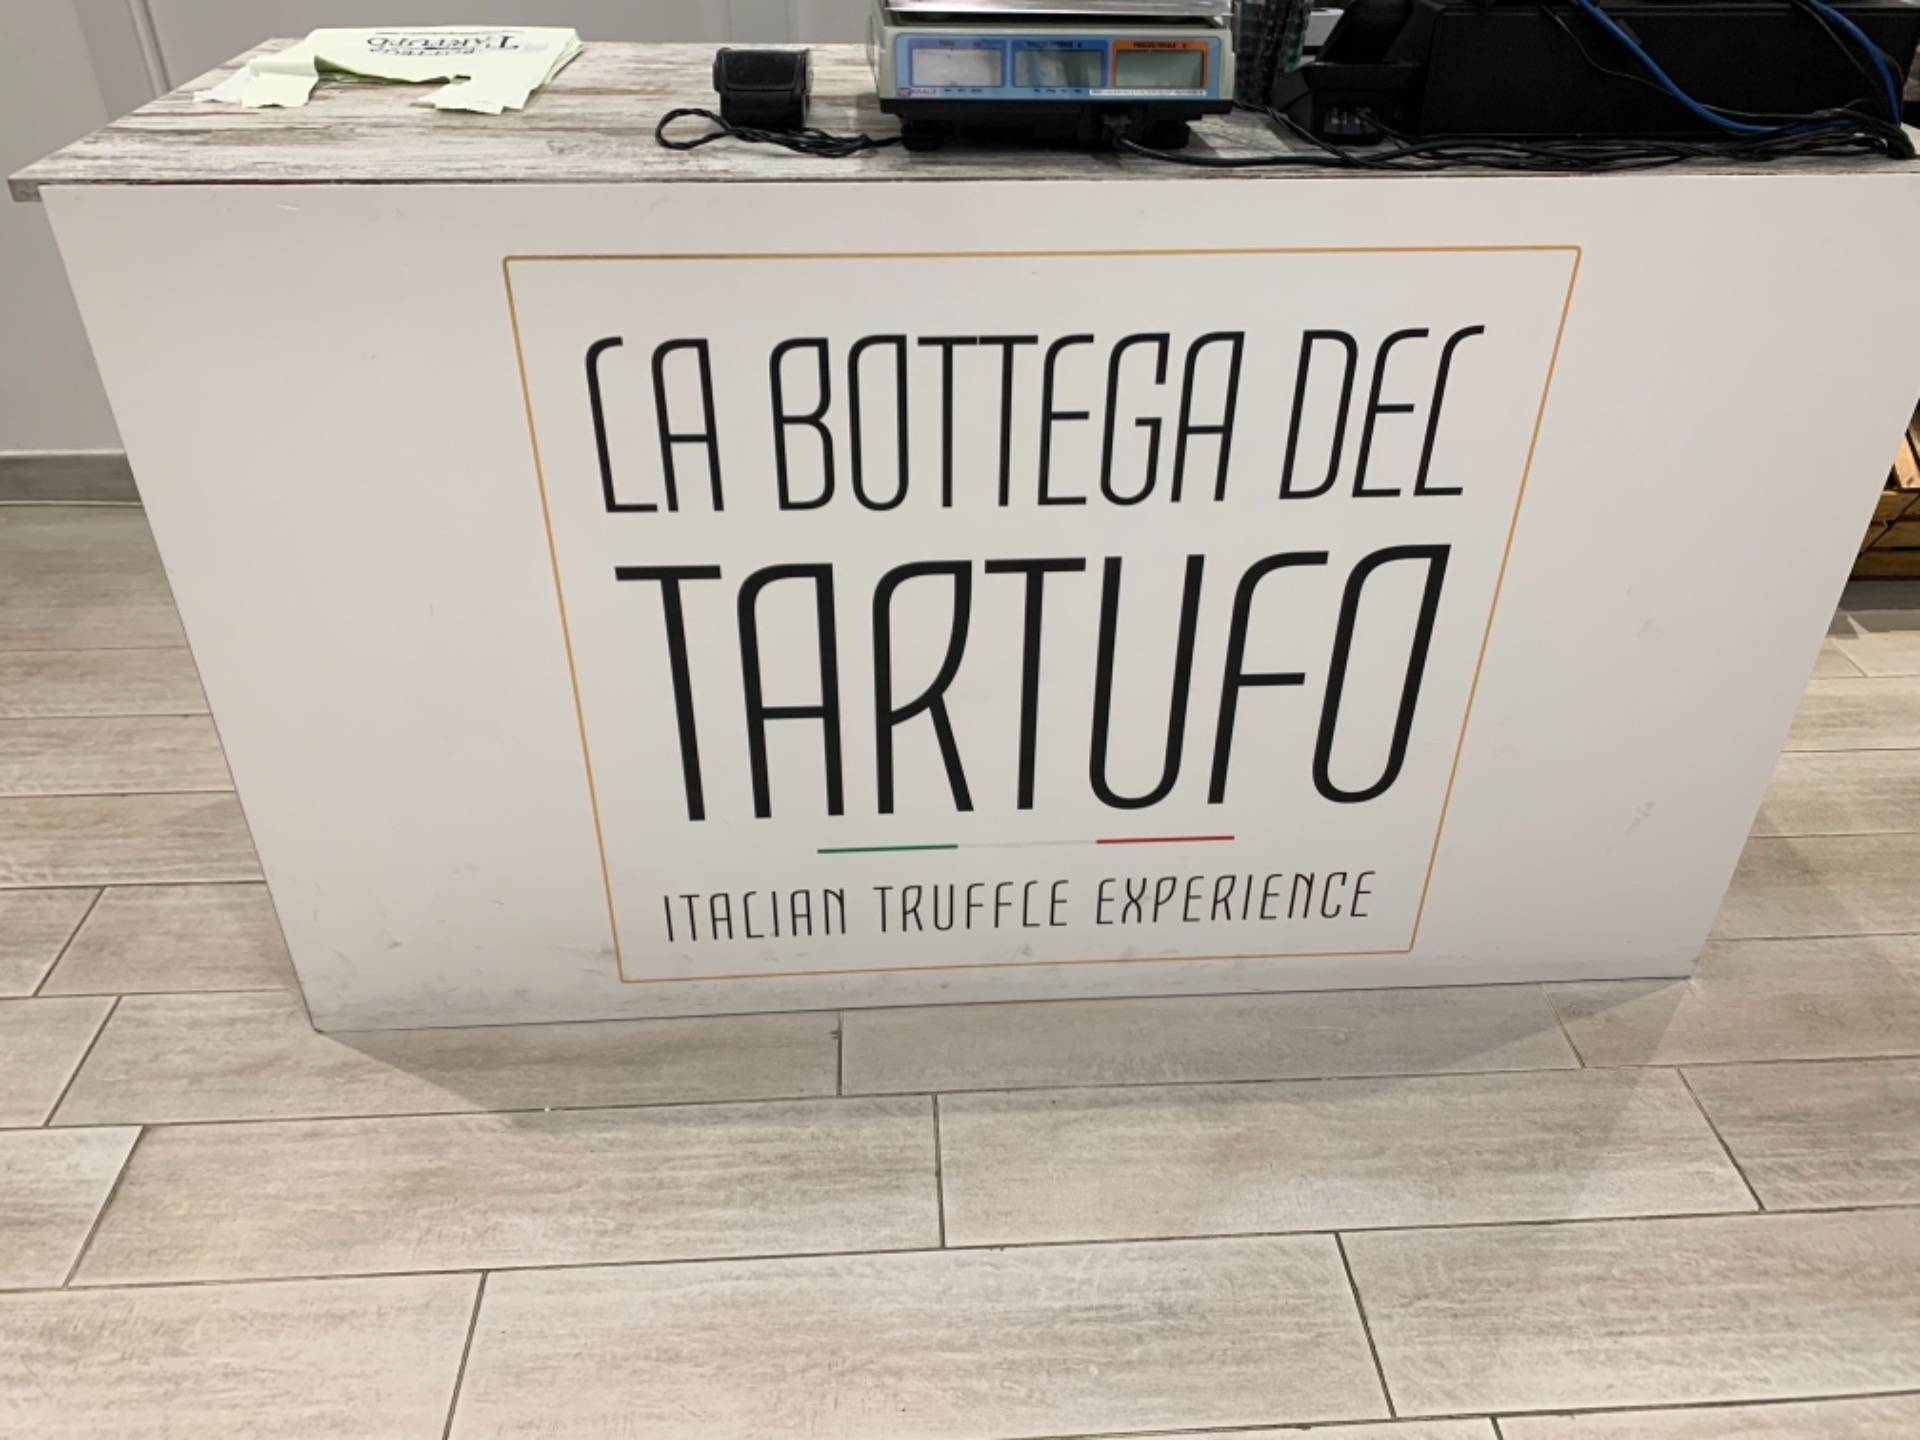 # GOTTA LOVE THE NAME BOTTEGA DEL TARTUFO